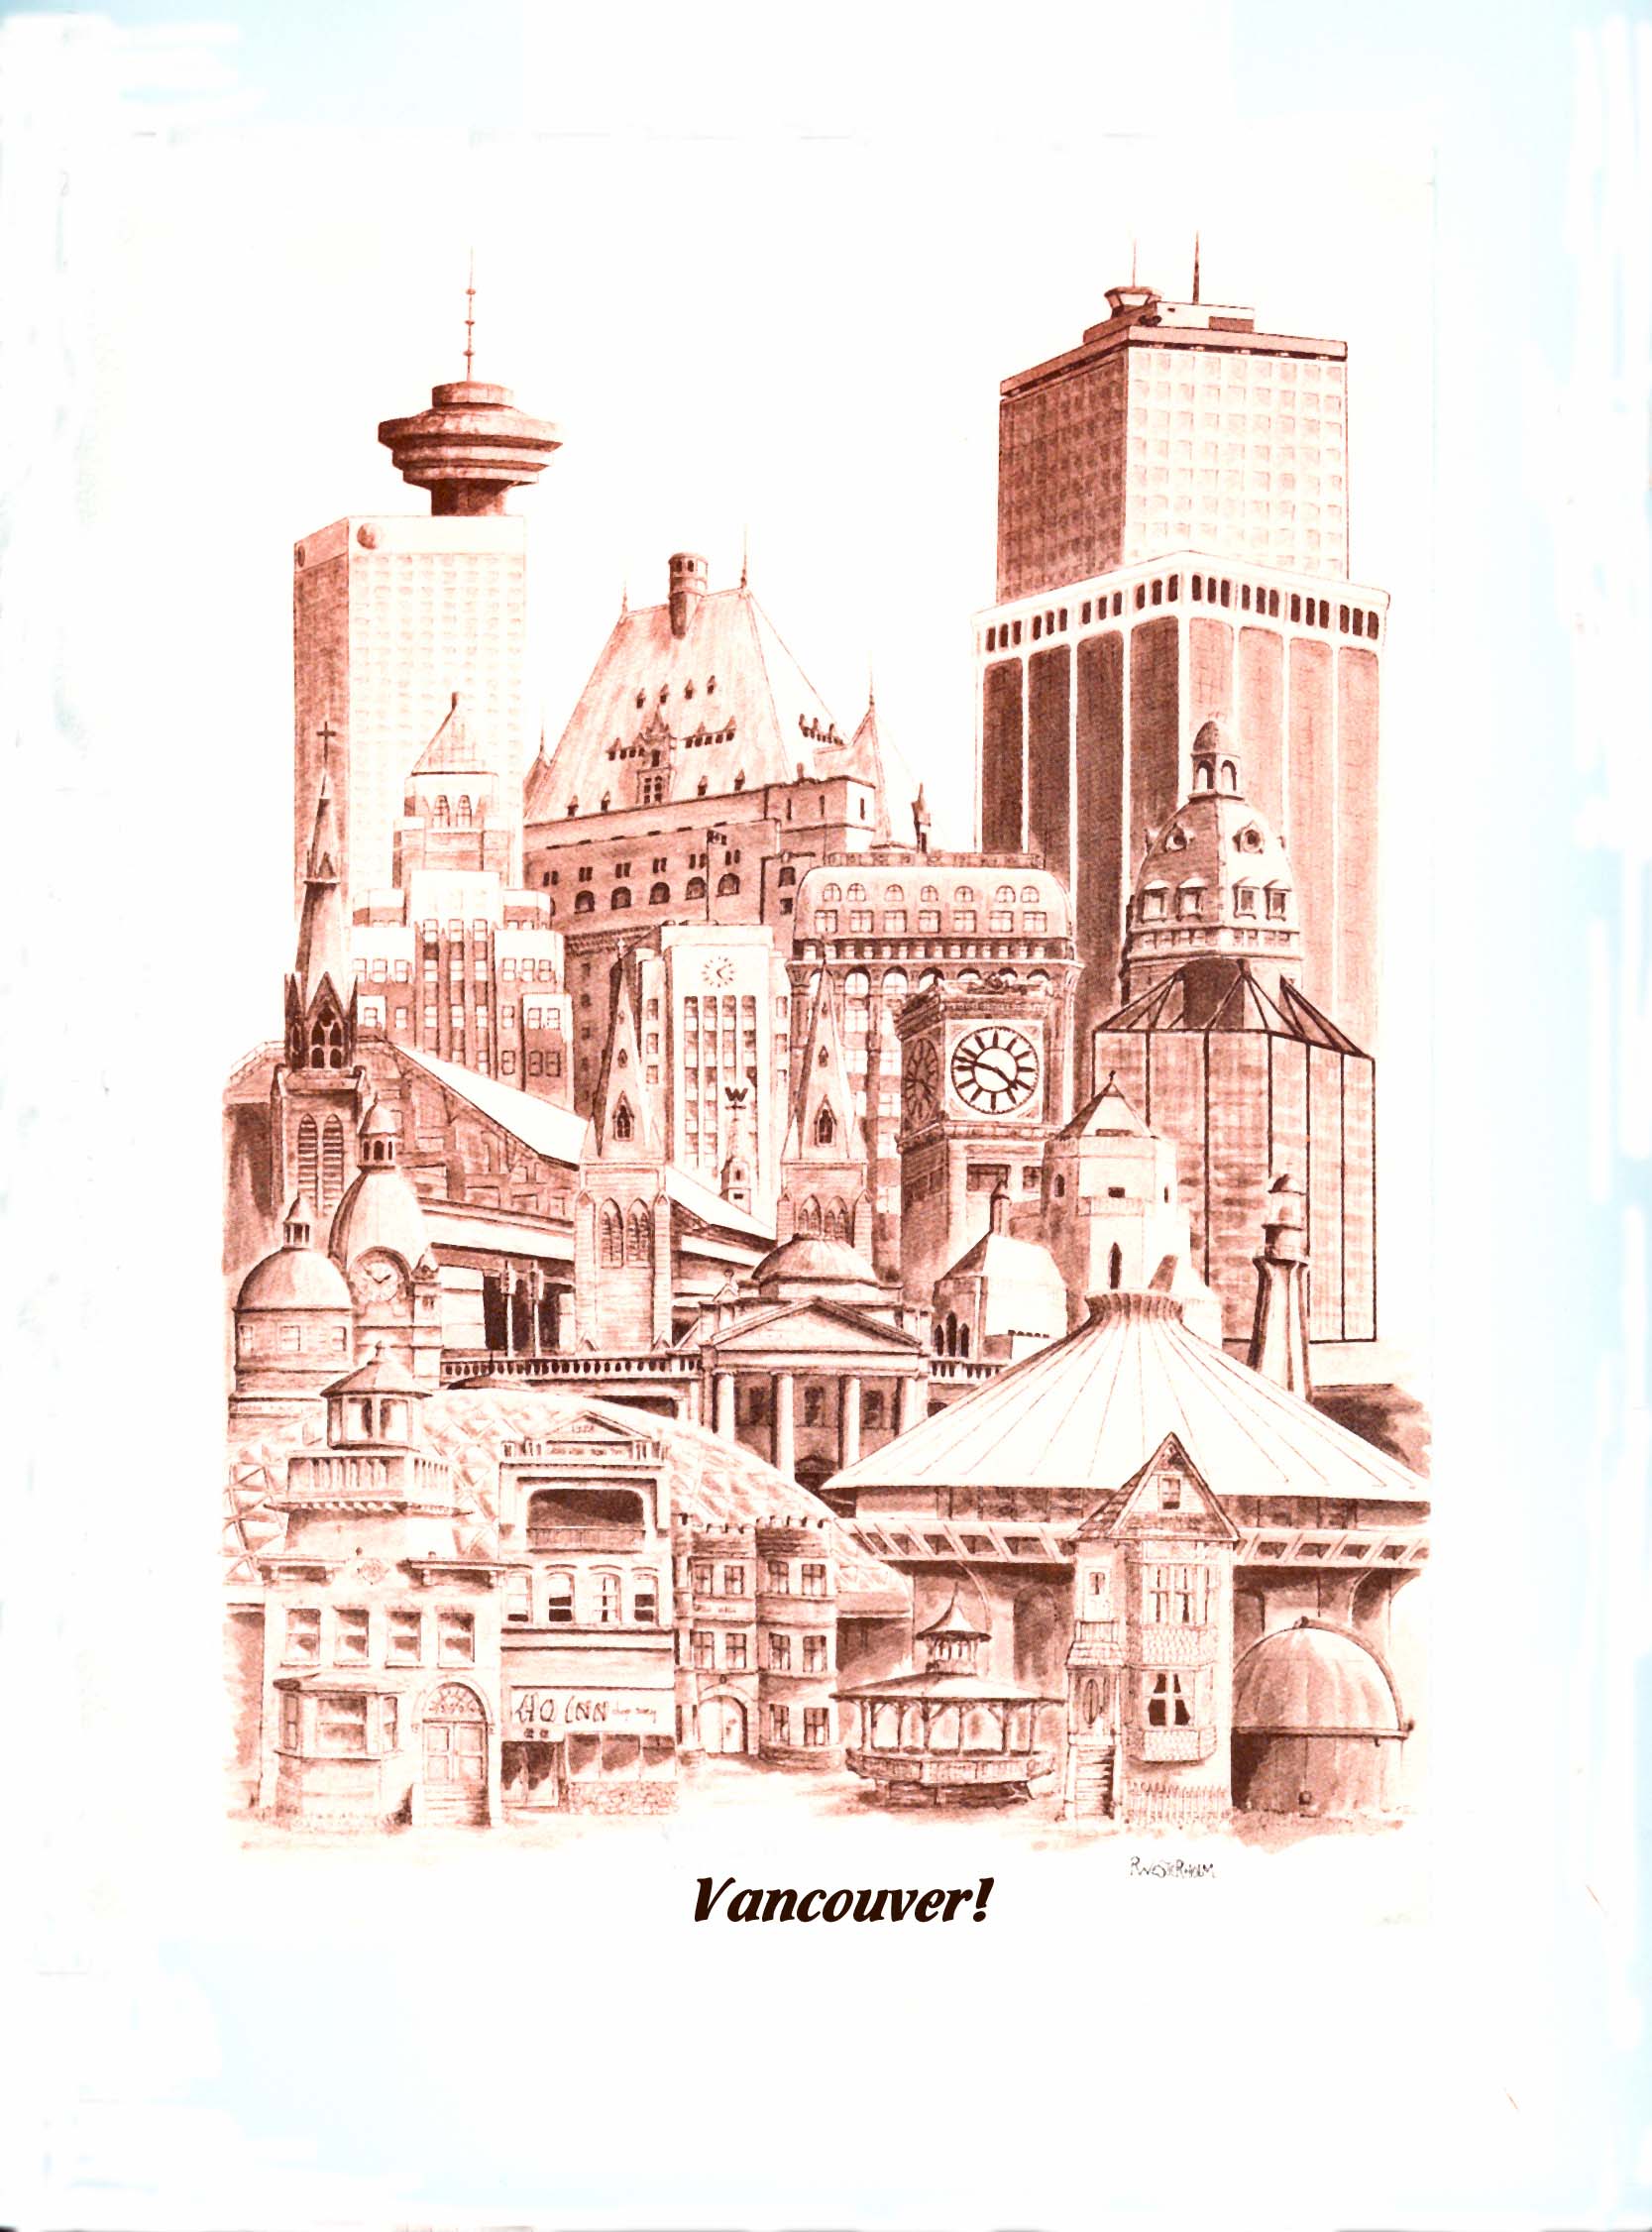 Vancouver art card design